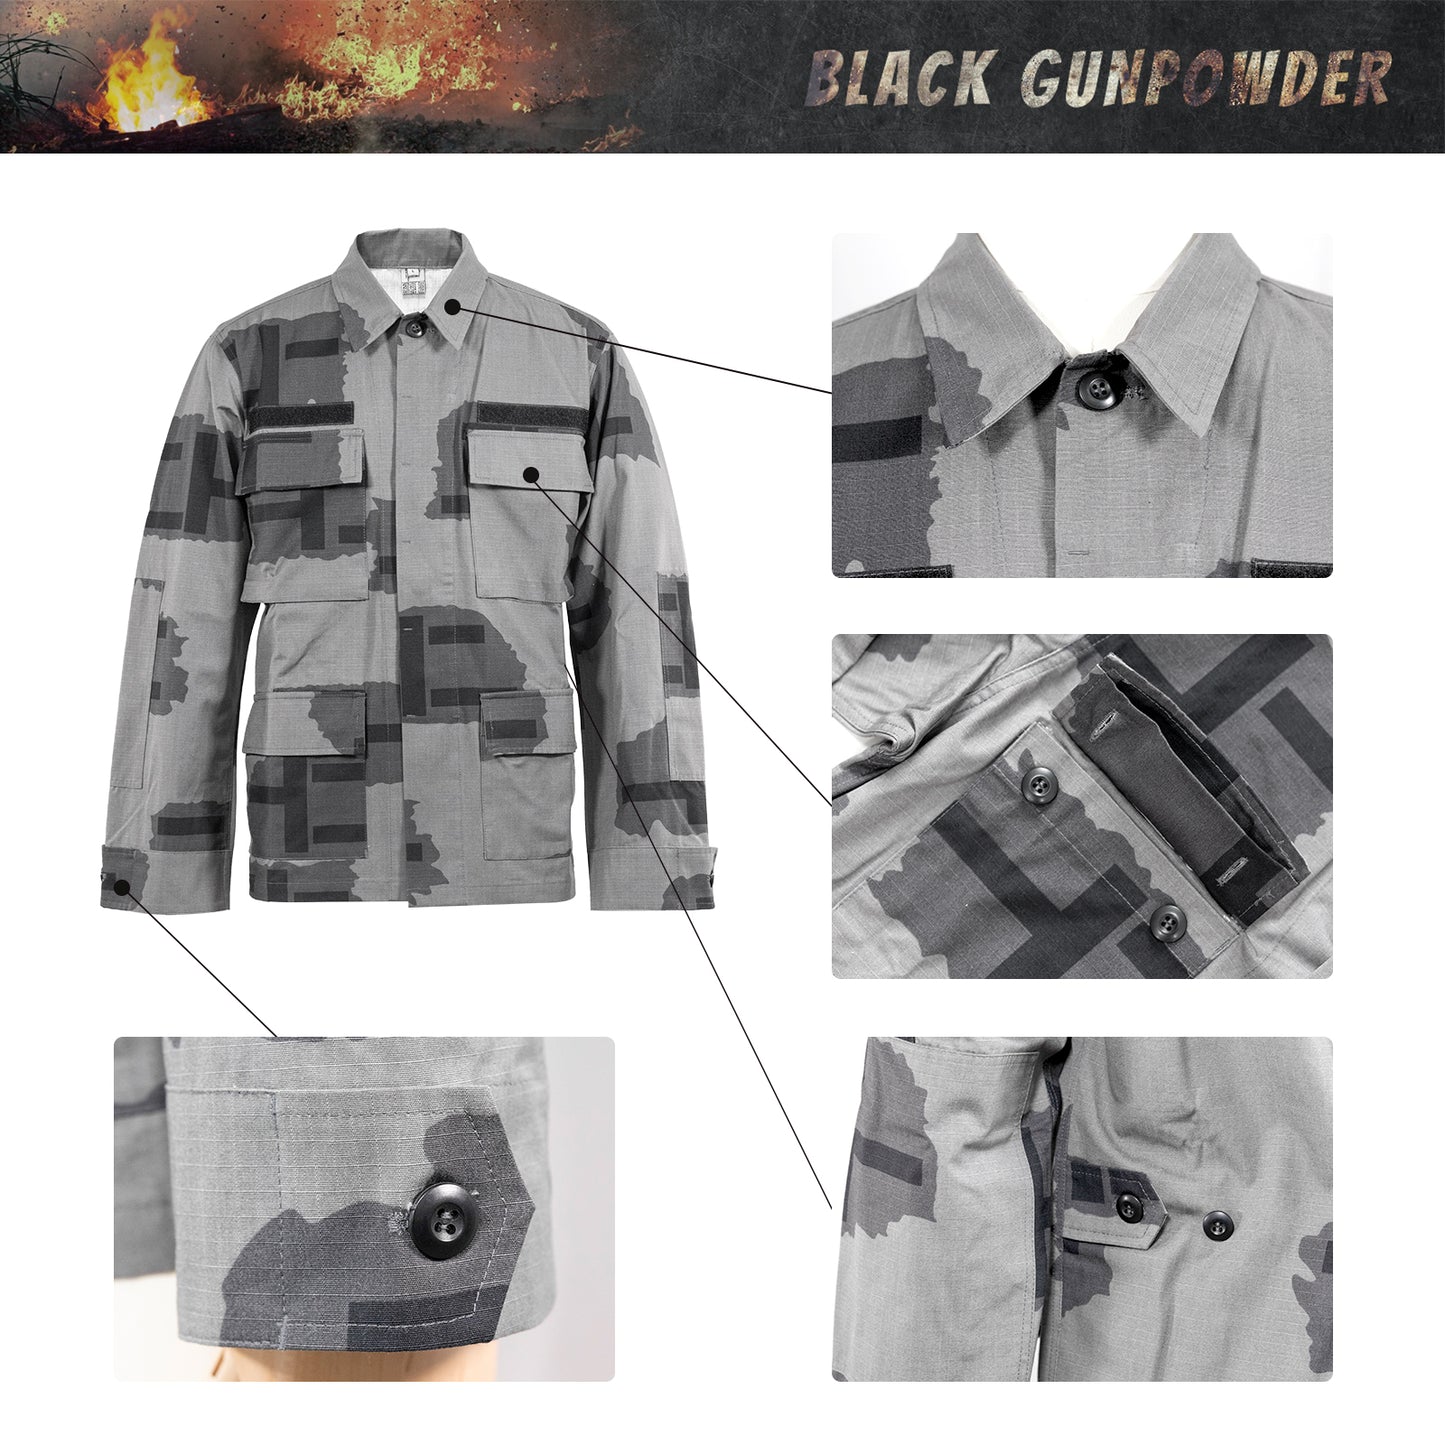 Black Gunpowder BDU Uniform Shirt Men Tactical Camo Military Paintball Airsoft Hunting Hiking Outdoor